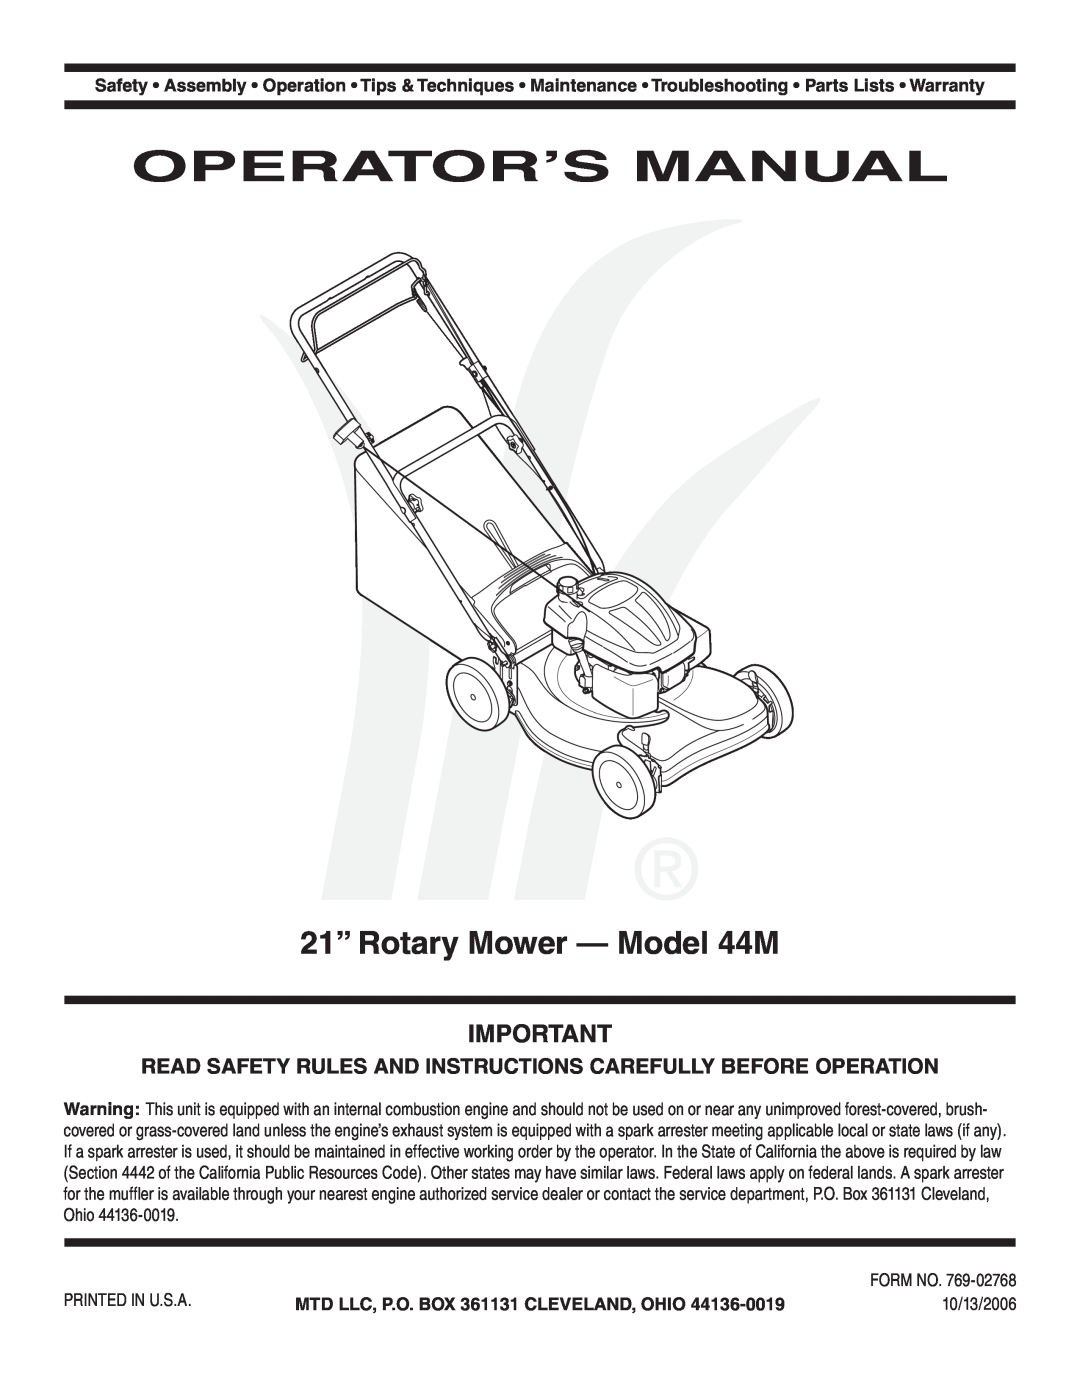 MTD warranty Operator’S Manual, 21” Rotary Mower - Model 44M, MTD LLC, P.O. BOX 361131 CLEVELAND, OHIO 